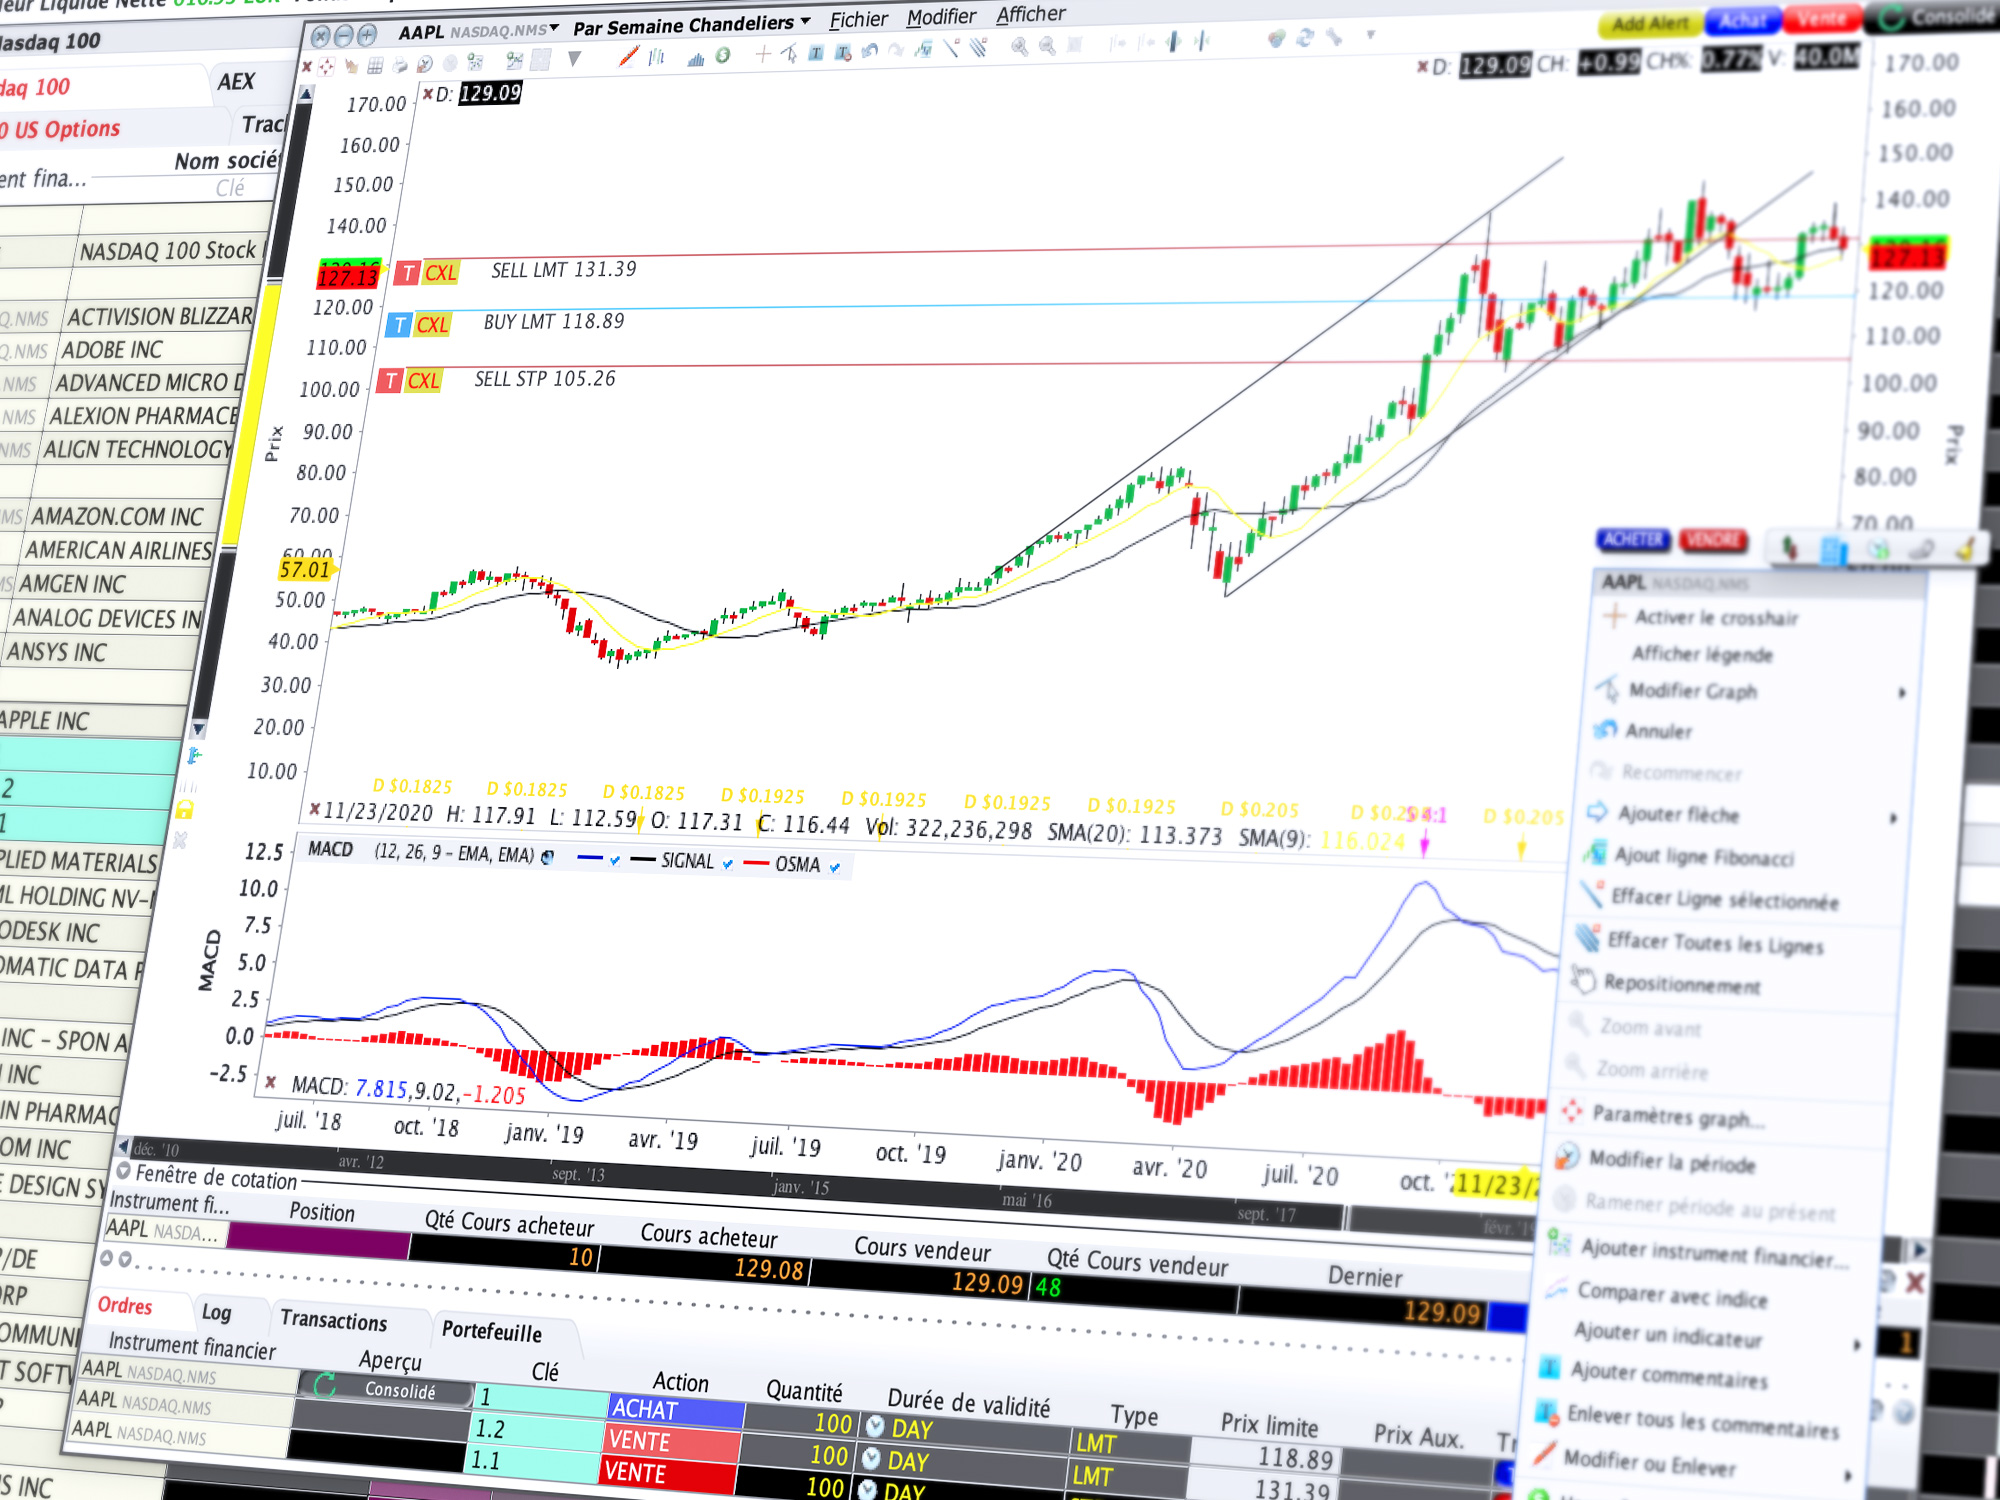 Trading de CFD : analyse graphique professionnelle avec l'outil ChartTrader